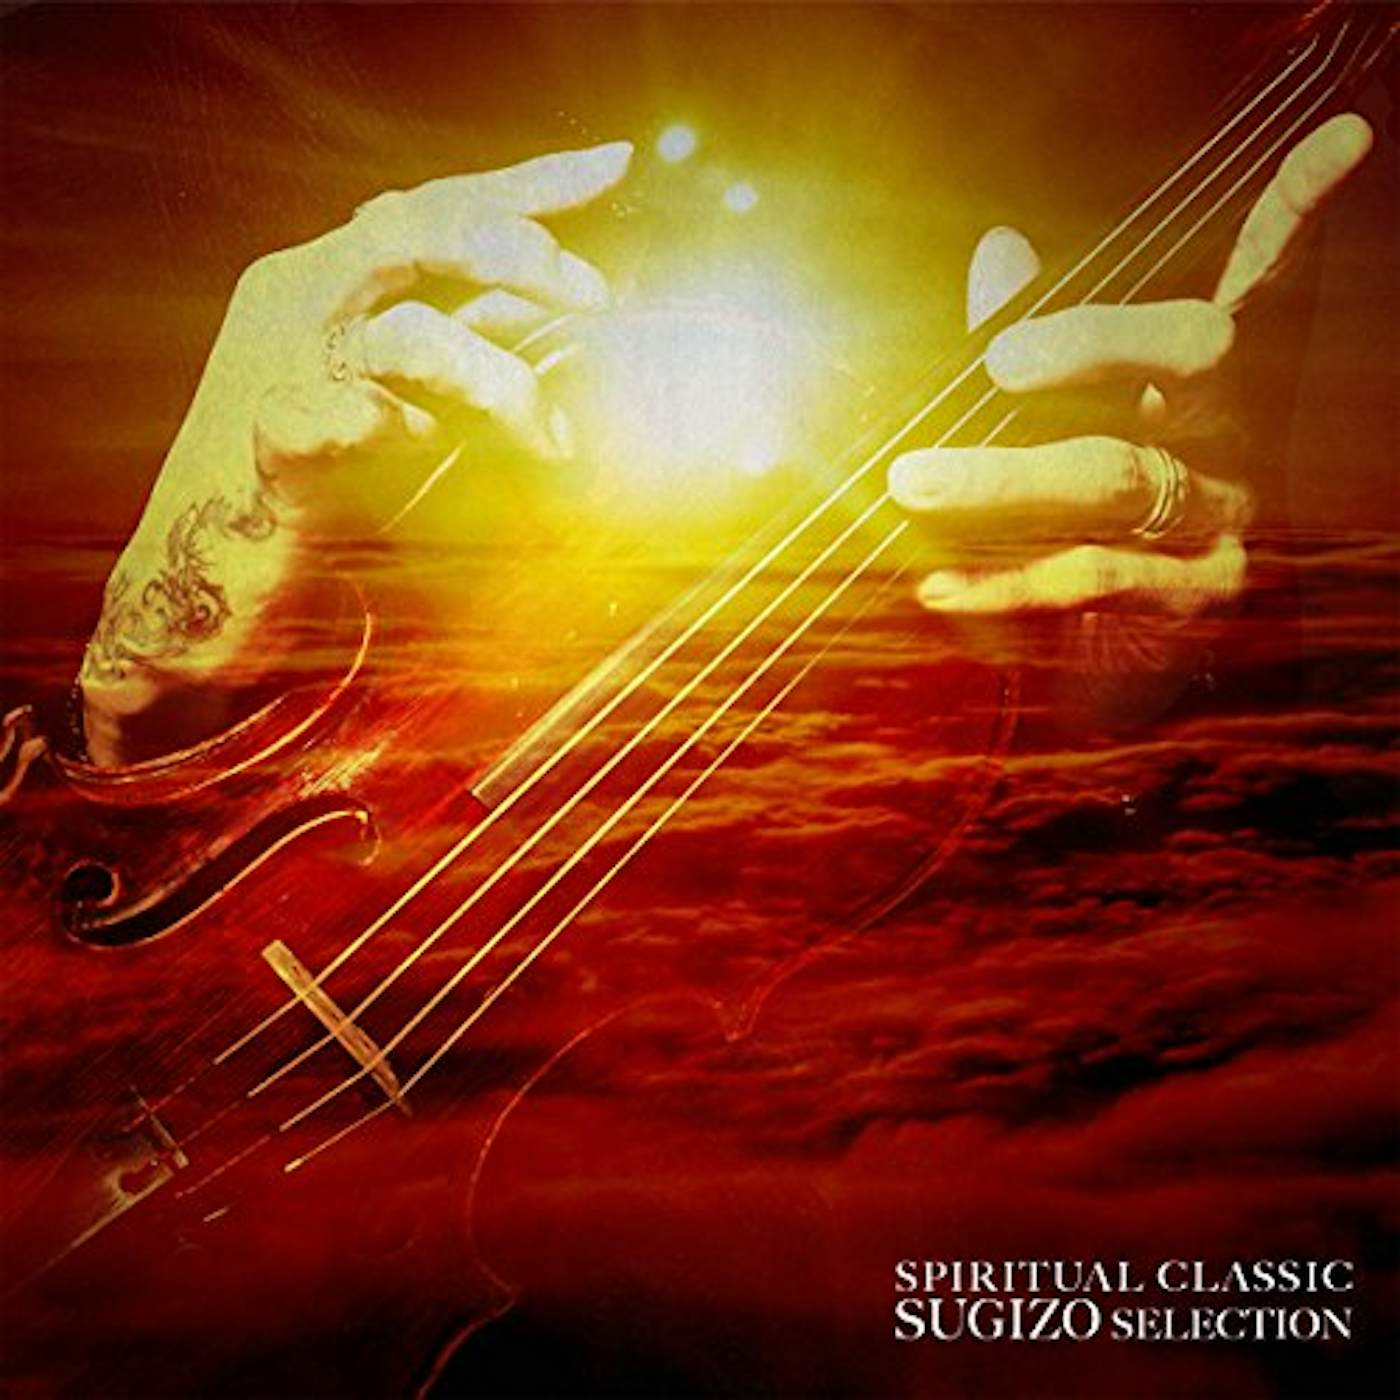 SPRITUAL CLASSIC SUGIZO SELECTION CD